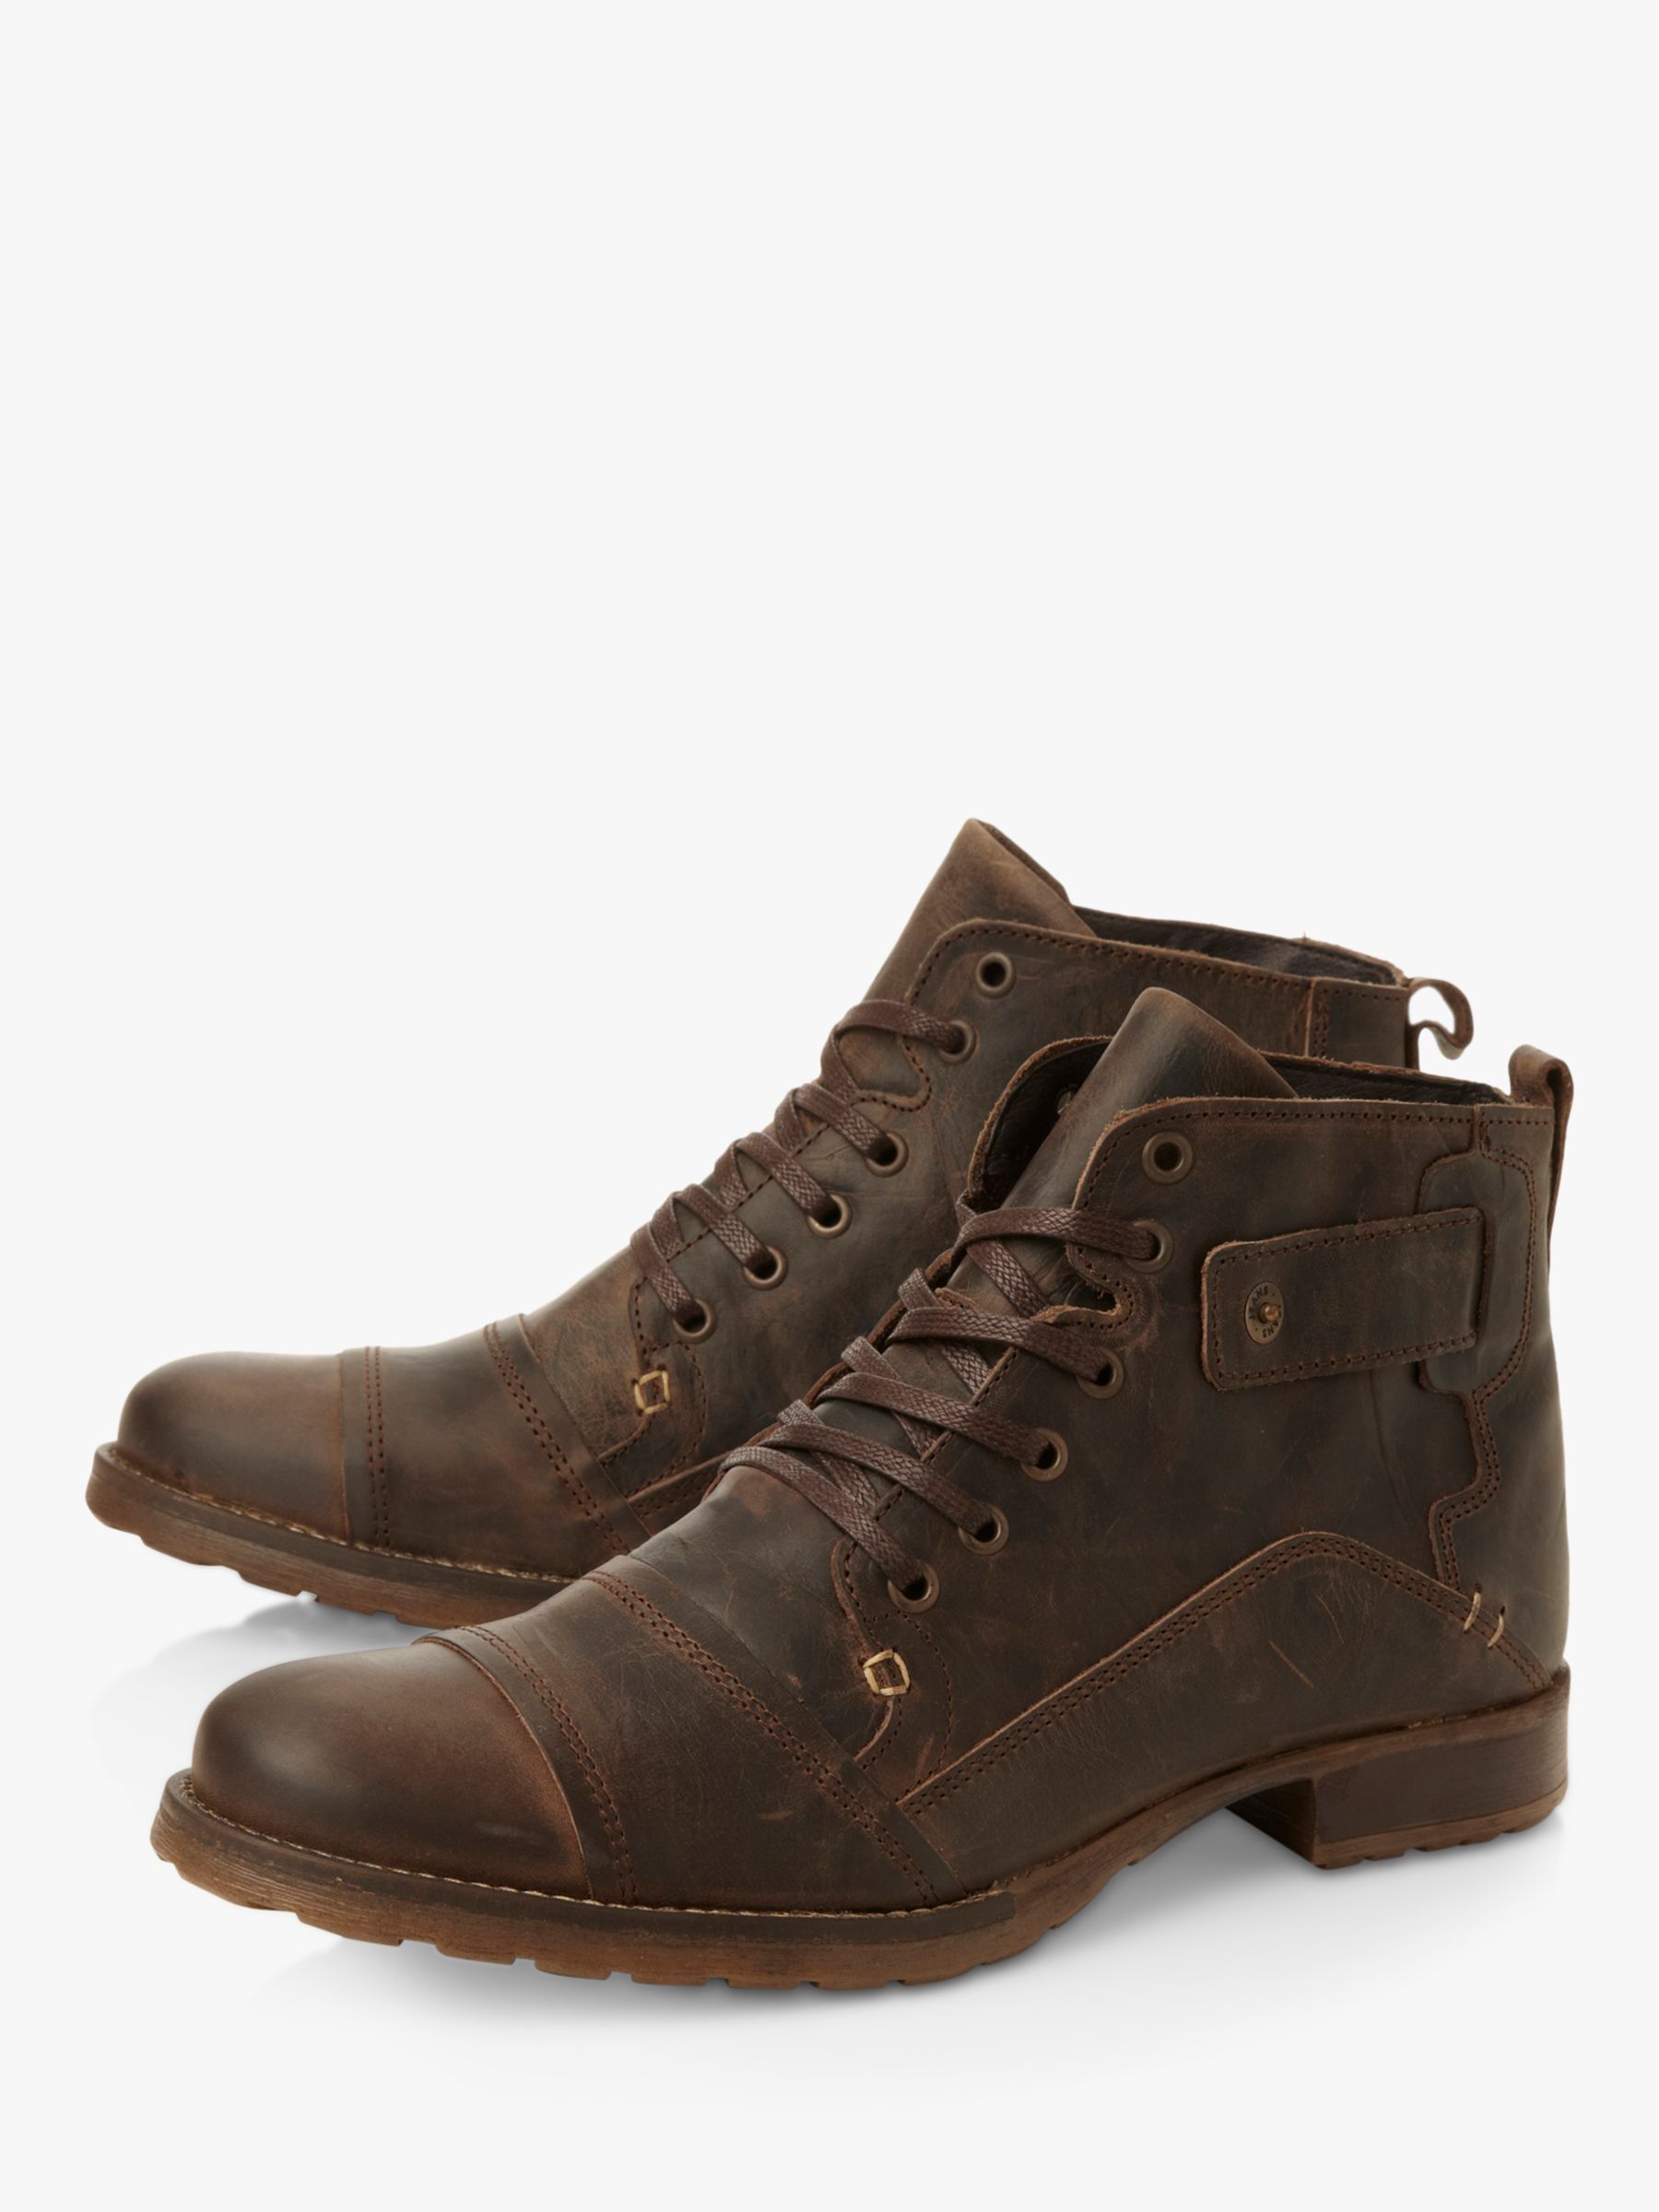 Dune Simon Leather Boots, Dark brown, 6